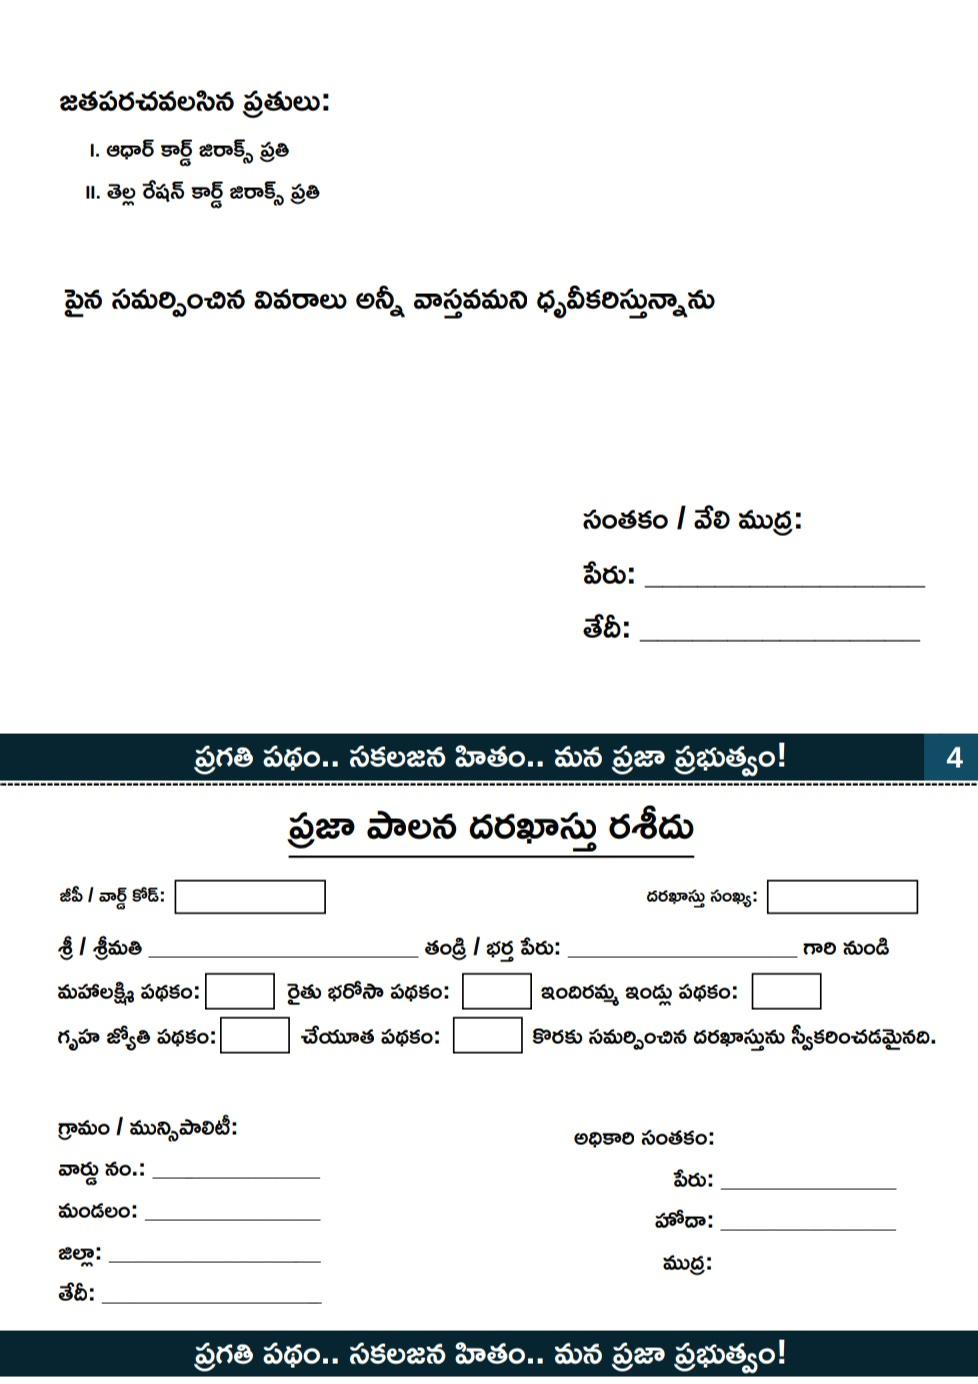 Congress Praja Palana Application page 4